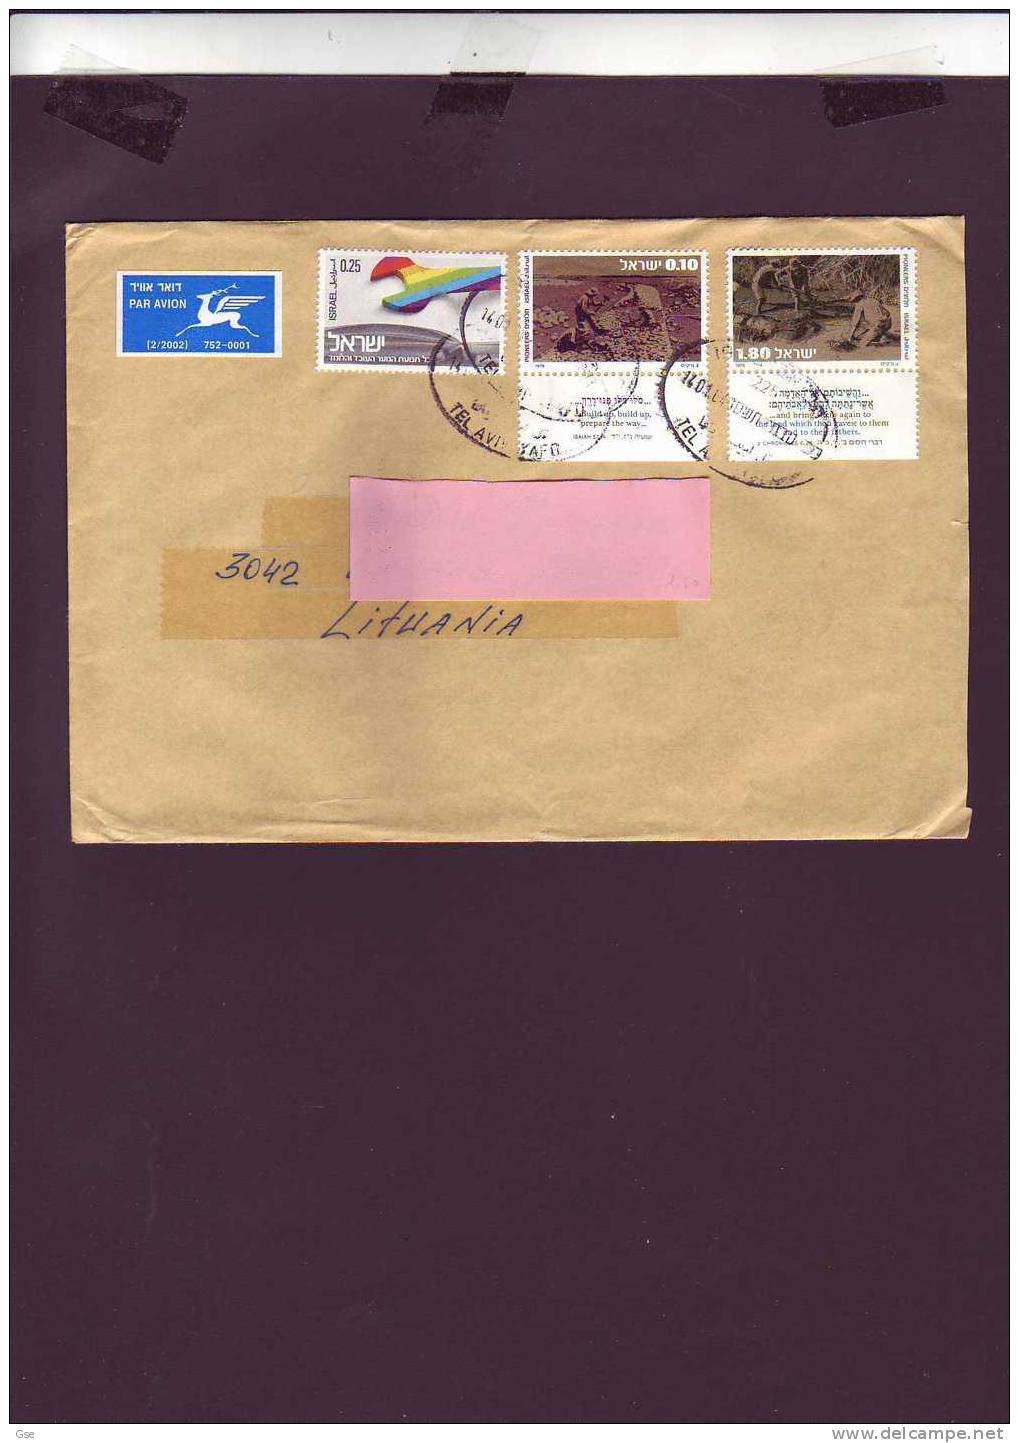 ISRAELE  2004 - Raccomandata  Per La Lituania - Storia Postale